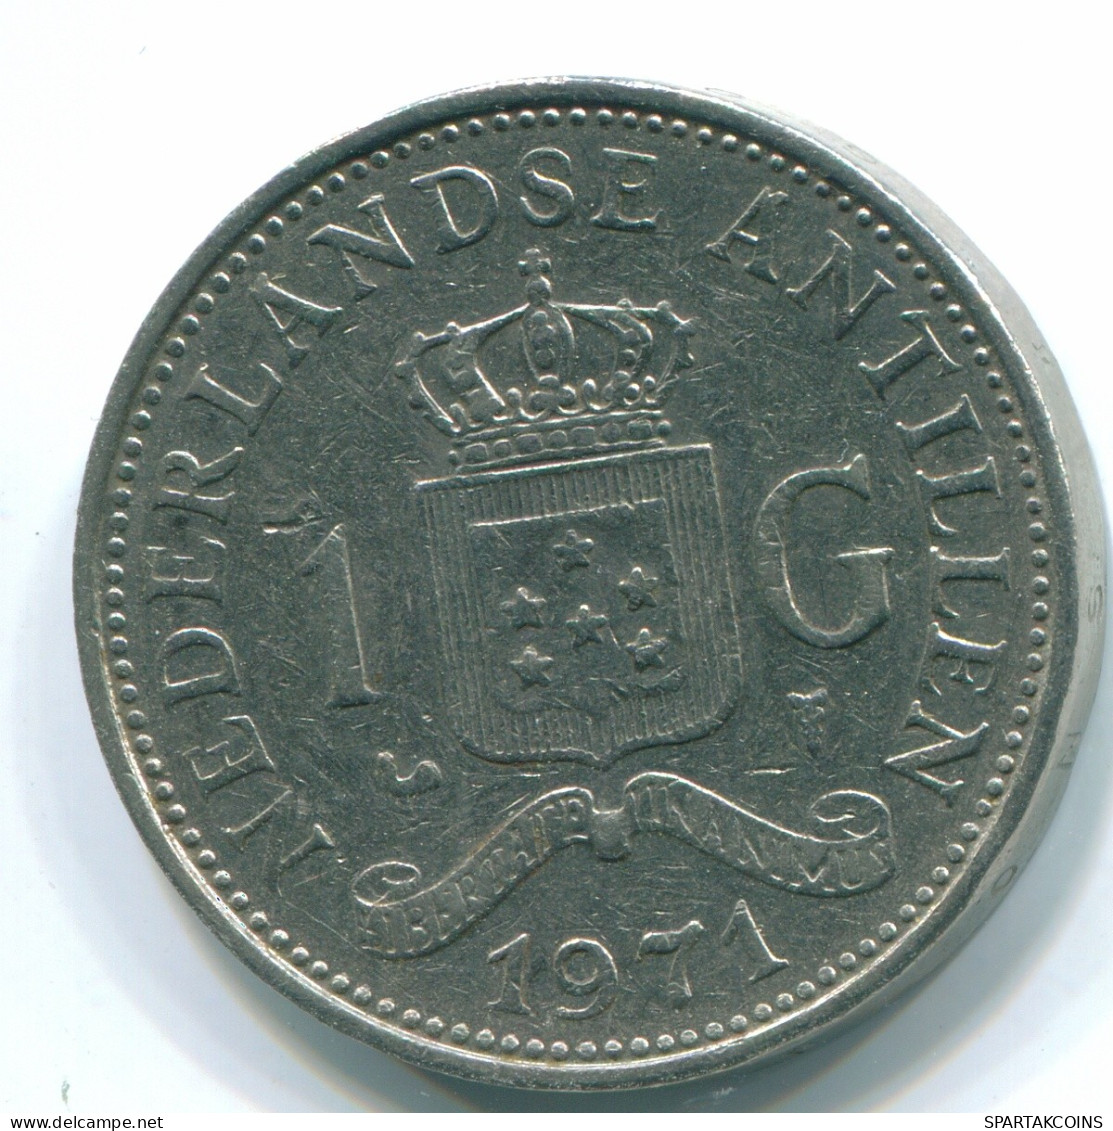 1 GULDEN 1971 NETHERLANDS ANTILLES Nickel Colonial Coin #S11976.U.A - Antilles Néerlandaises